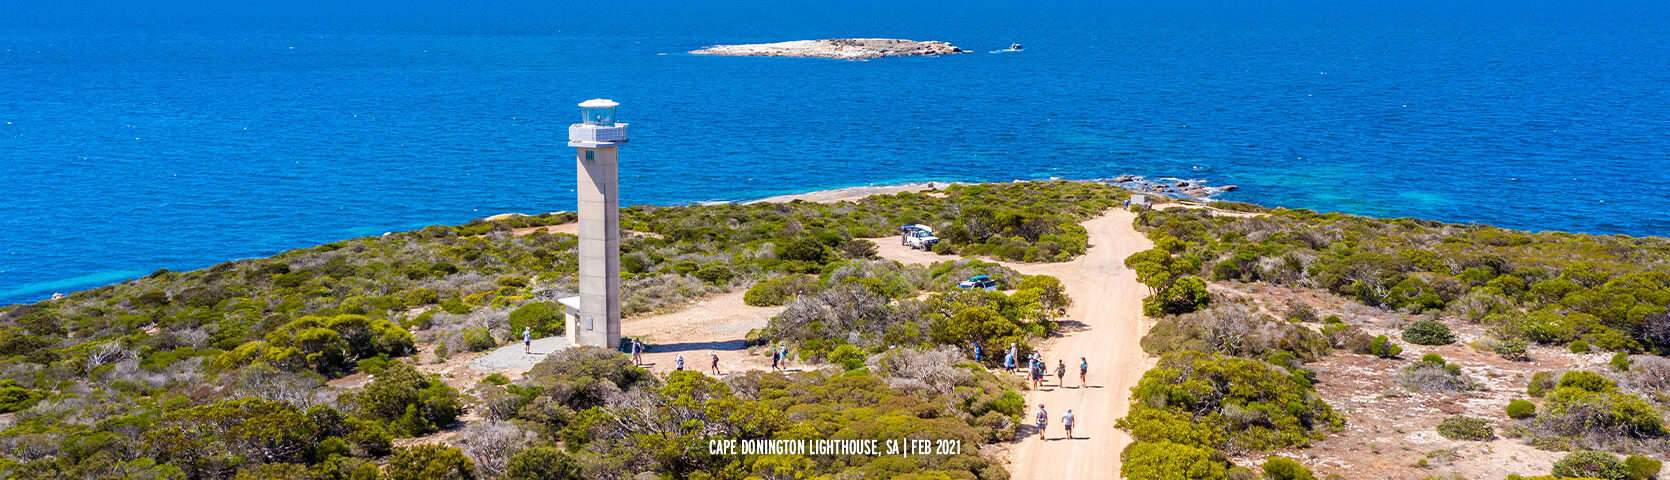 Cape-Donington-Lighthouse-South-Australia